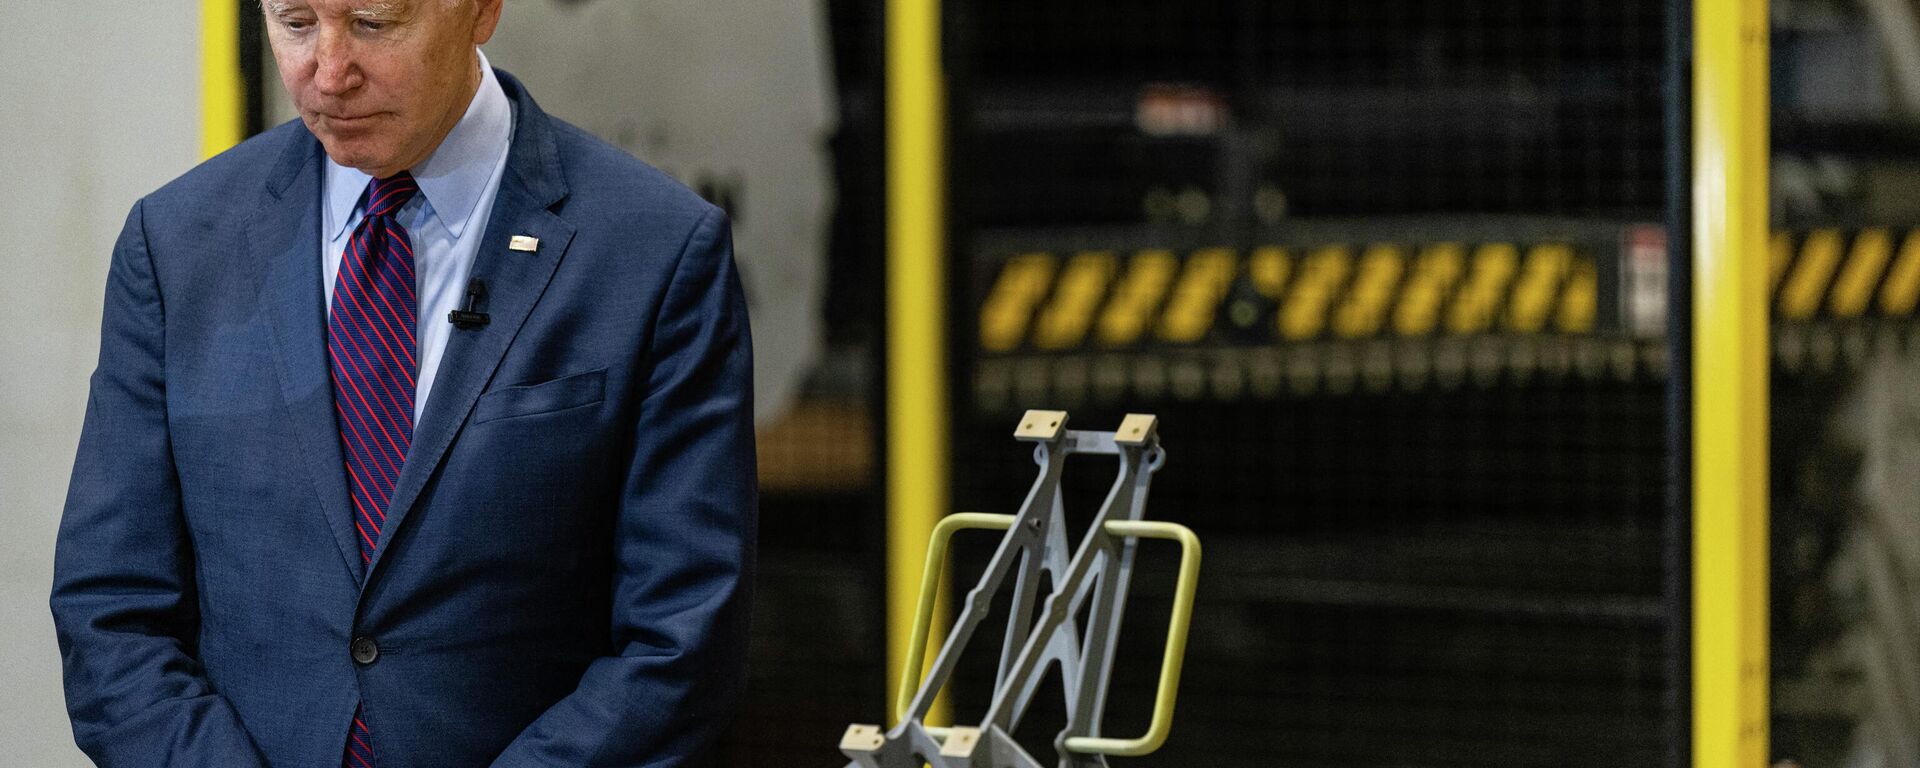 U.S. President Joe Biden stands in a manufacturing demonstration area at United Performance Metals on May 6, 2022 in Cincinnati, Ohio - Sputnik International, 1920, 07.05.2022